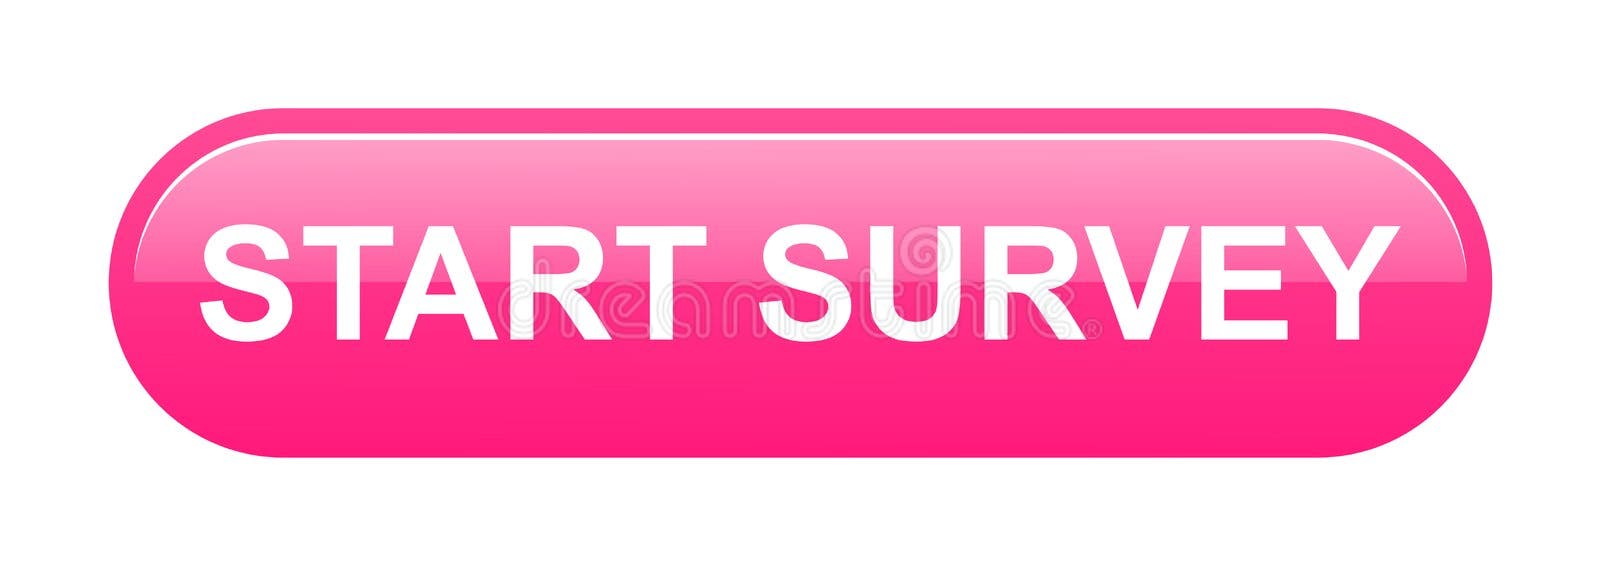 Start survey button stock vector. Illustration of click - 140430910